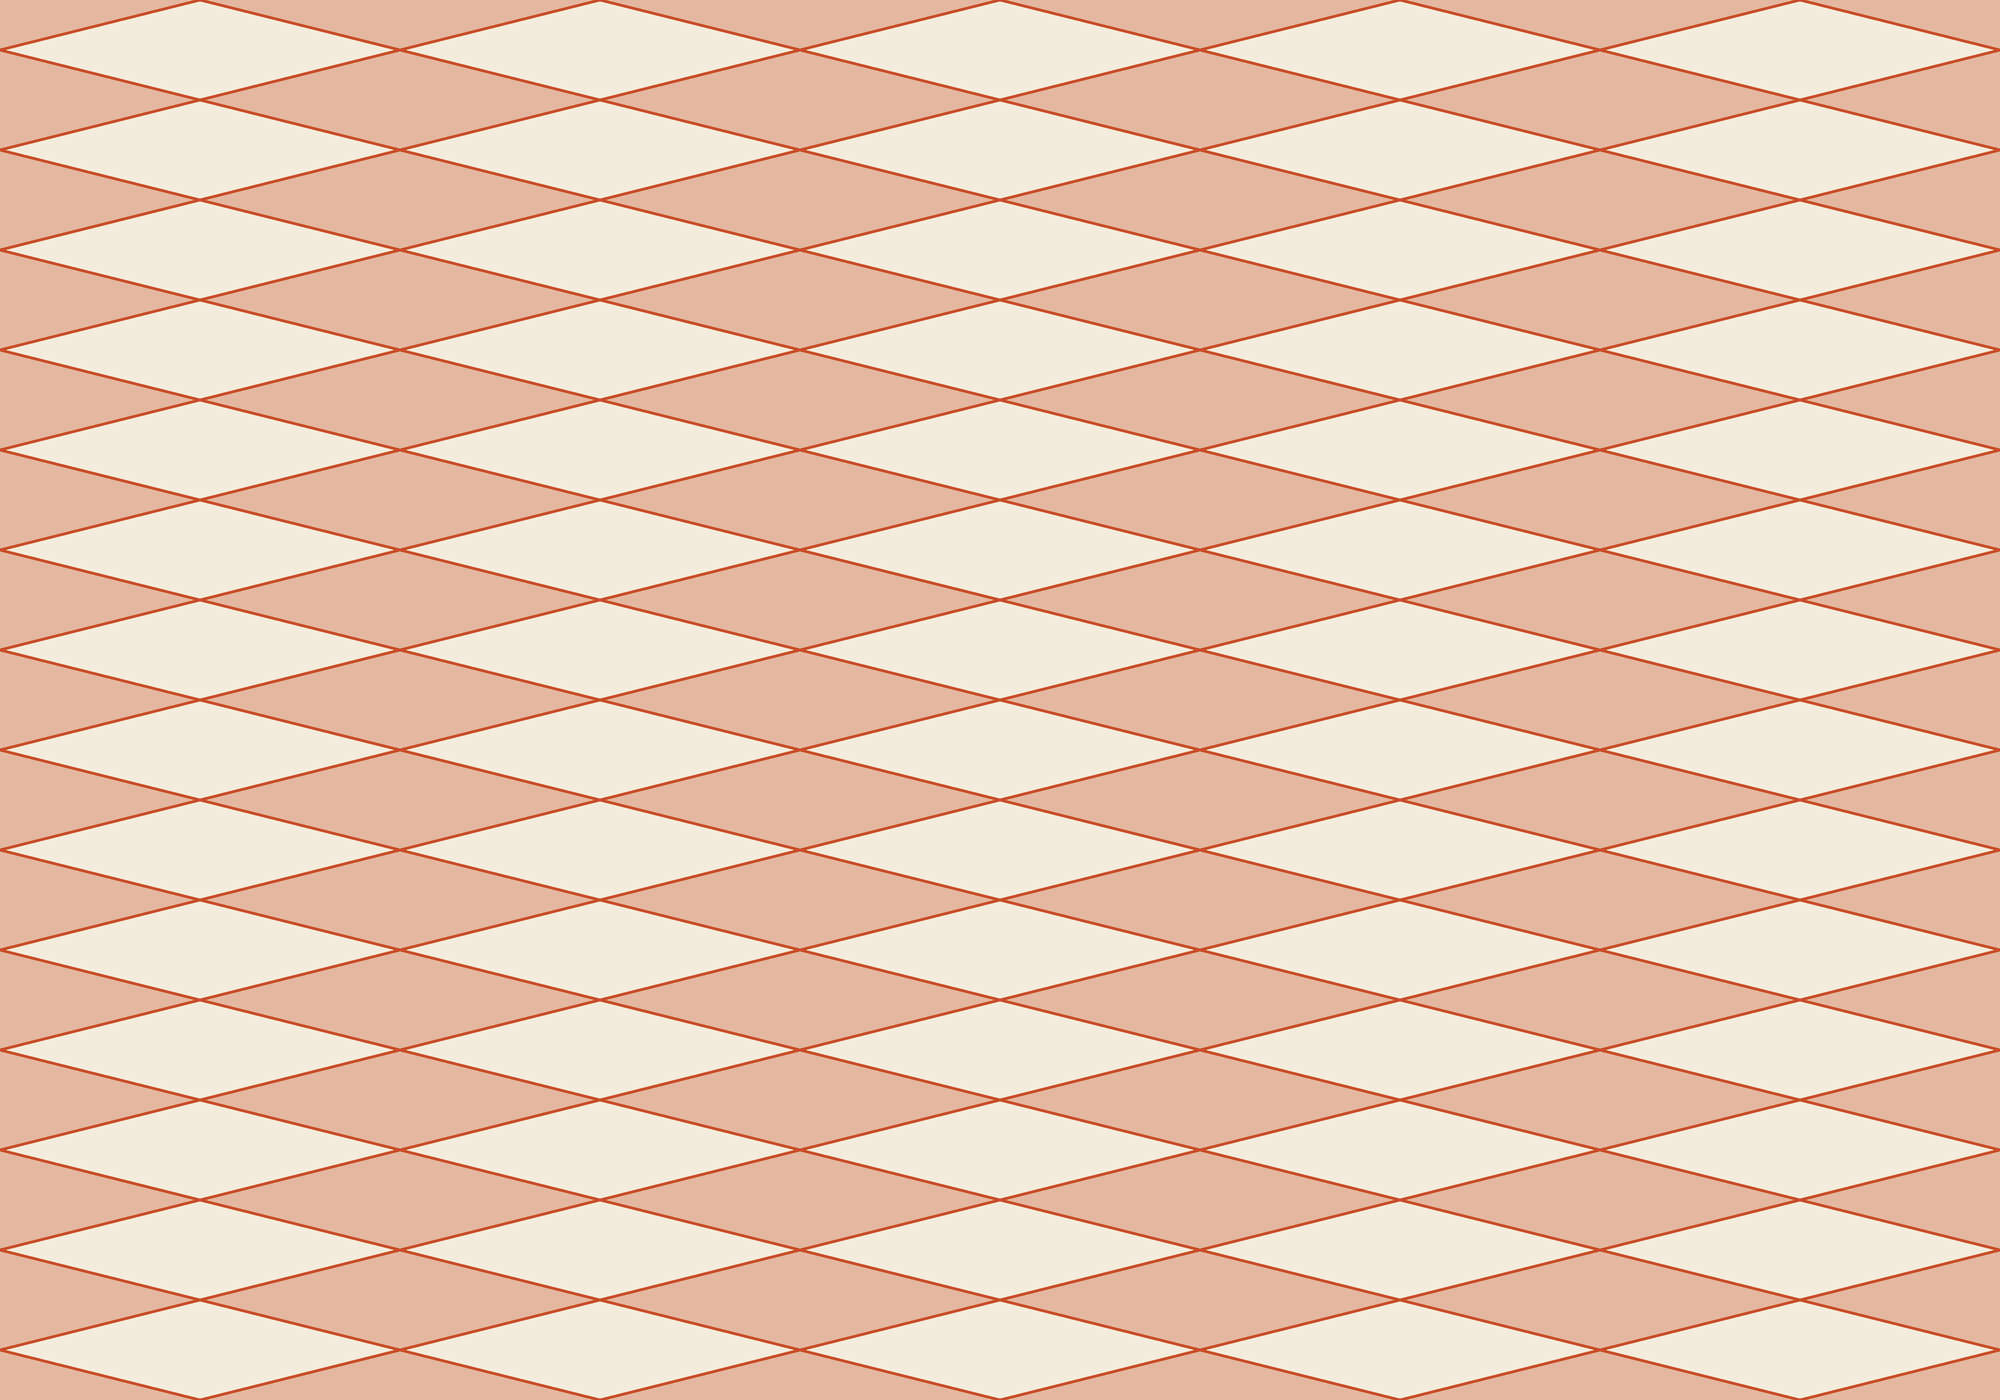             Photo wallpaper with diamonds & line pattern - Orange, Beige | Textured non-woven
        